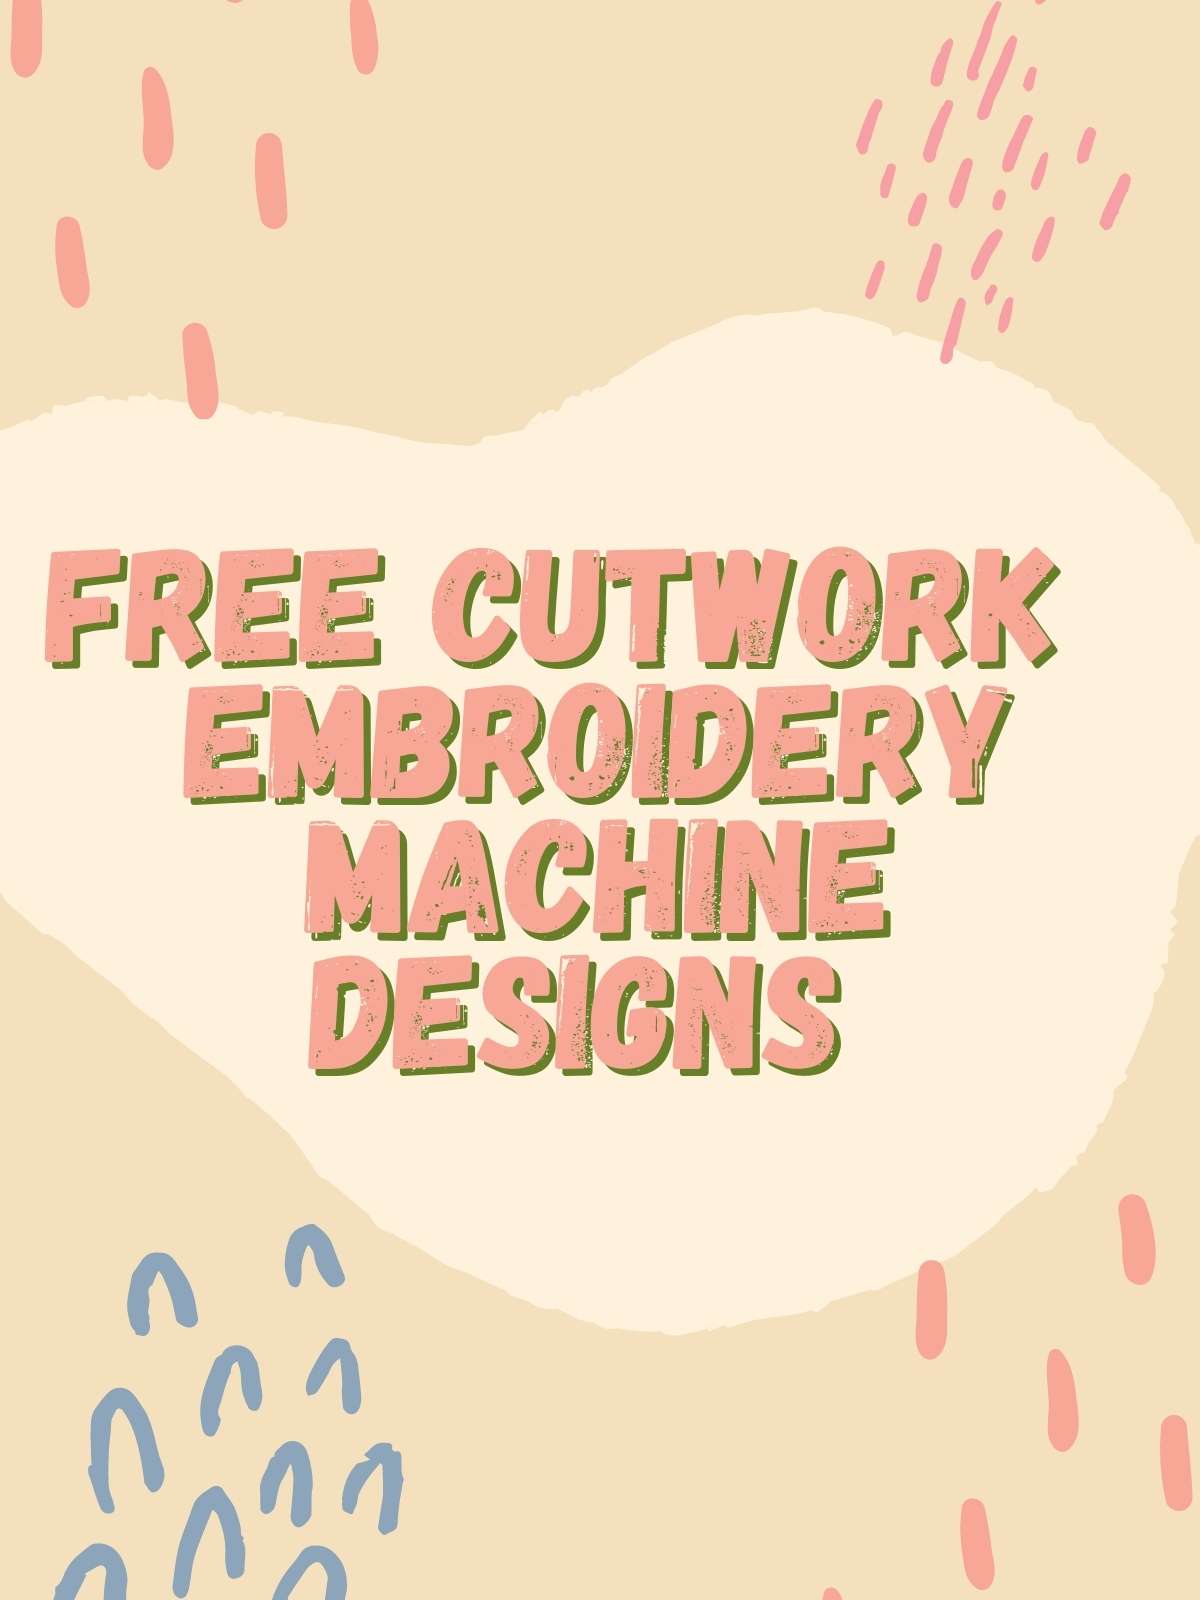 Free cutwork embroidery machine designs